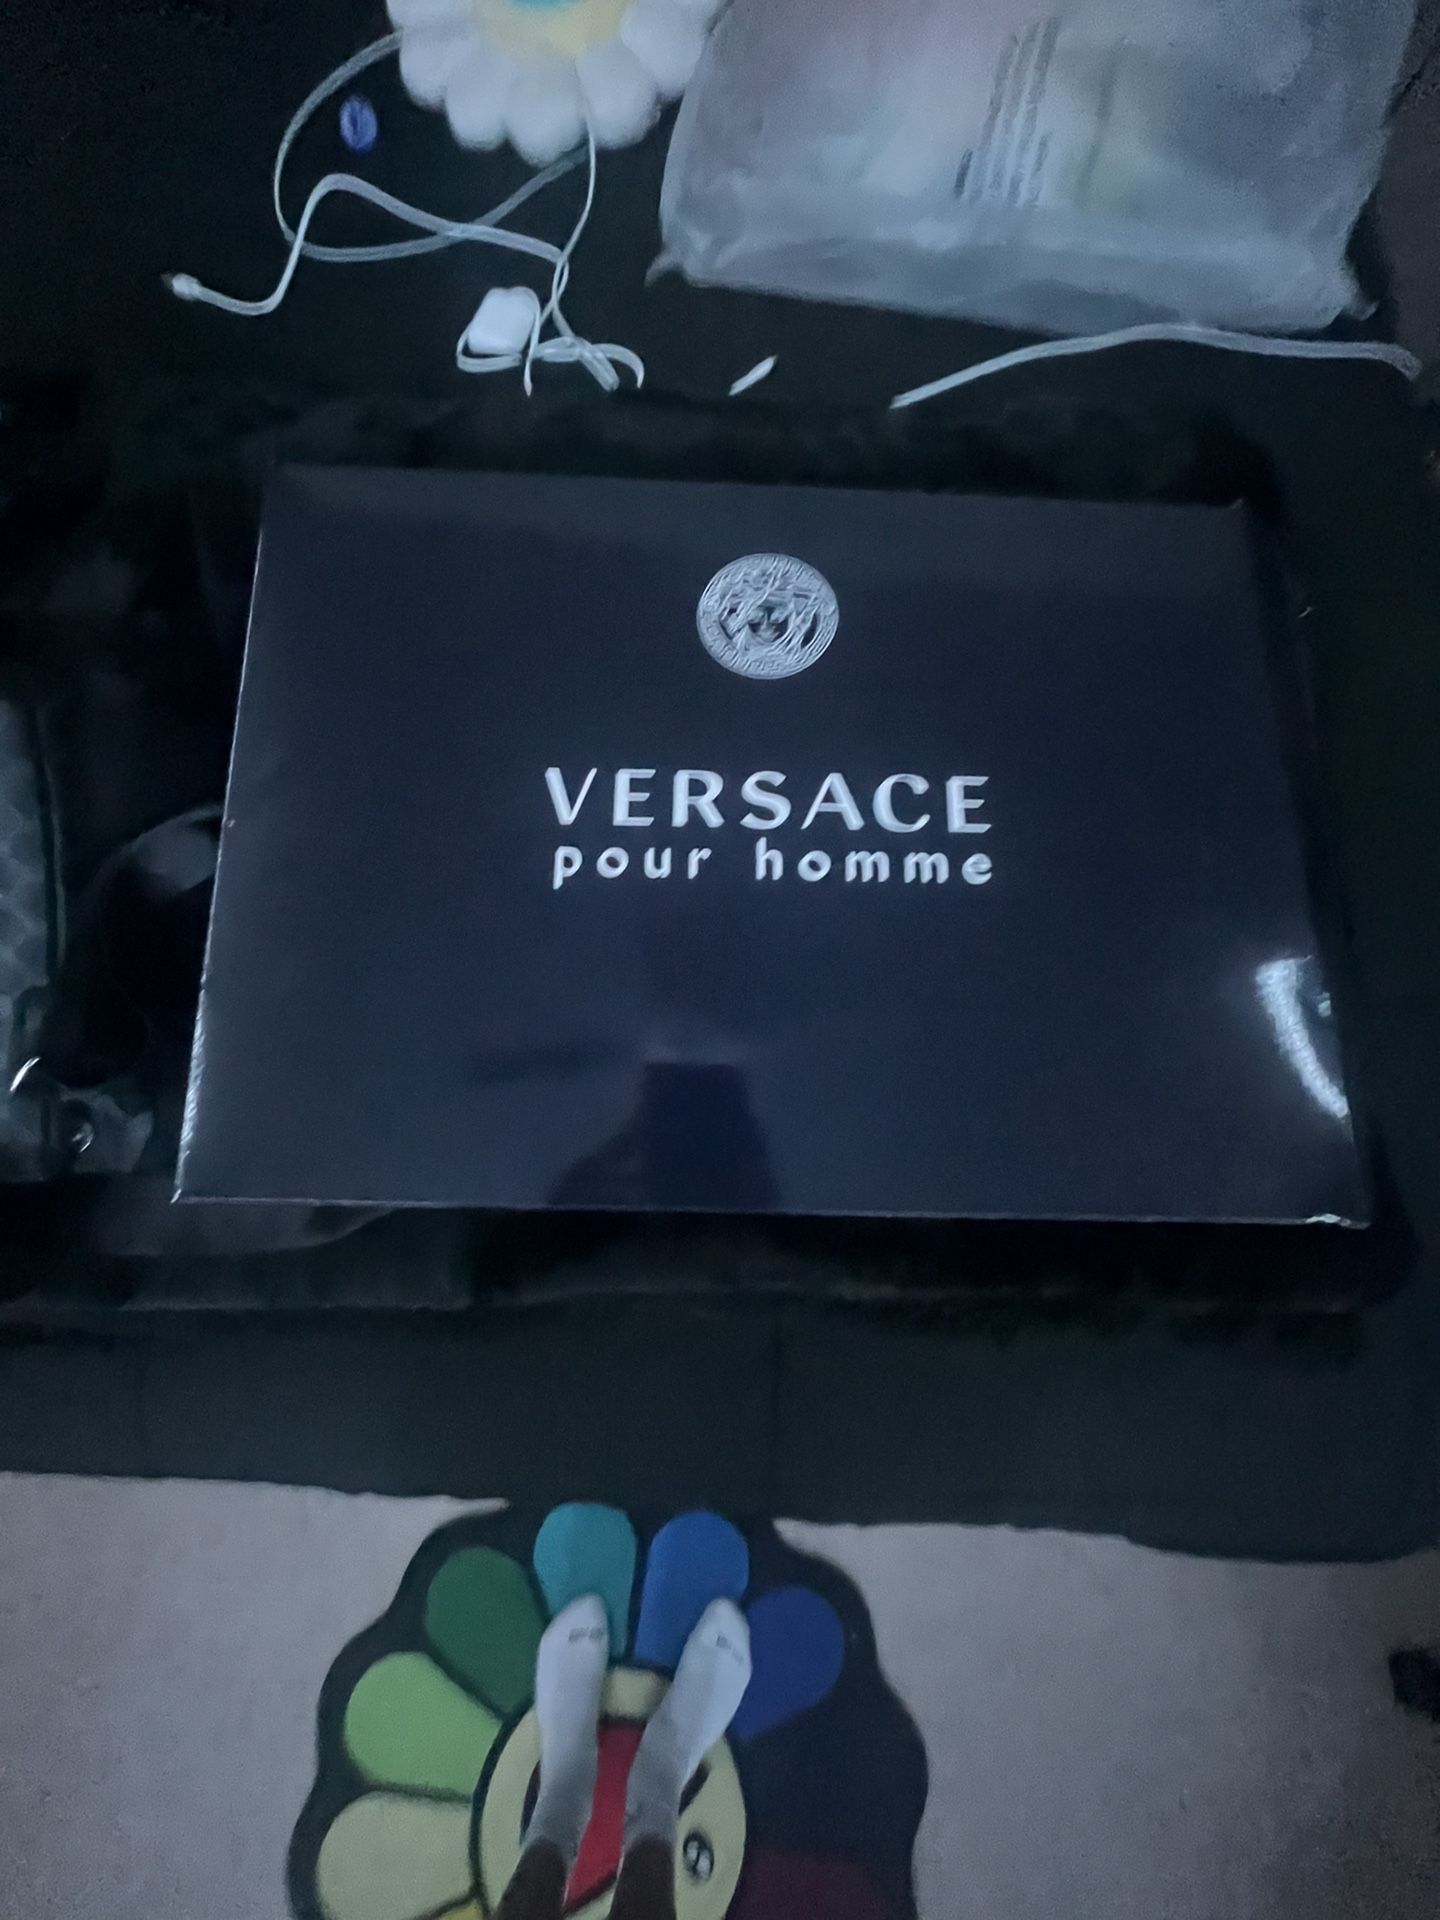 Versace Book Bag!